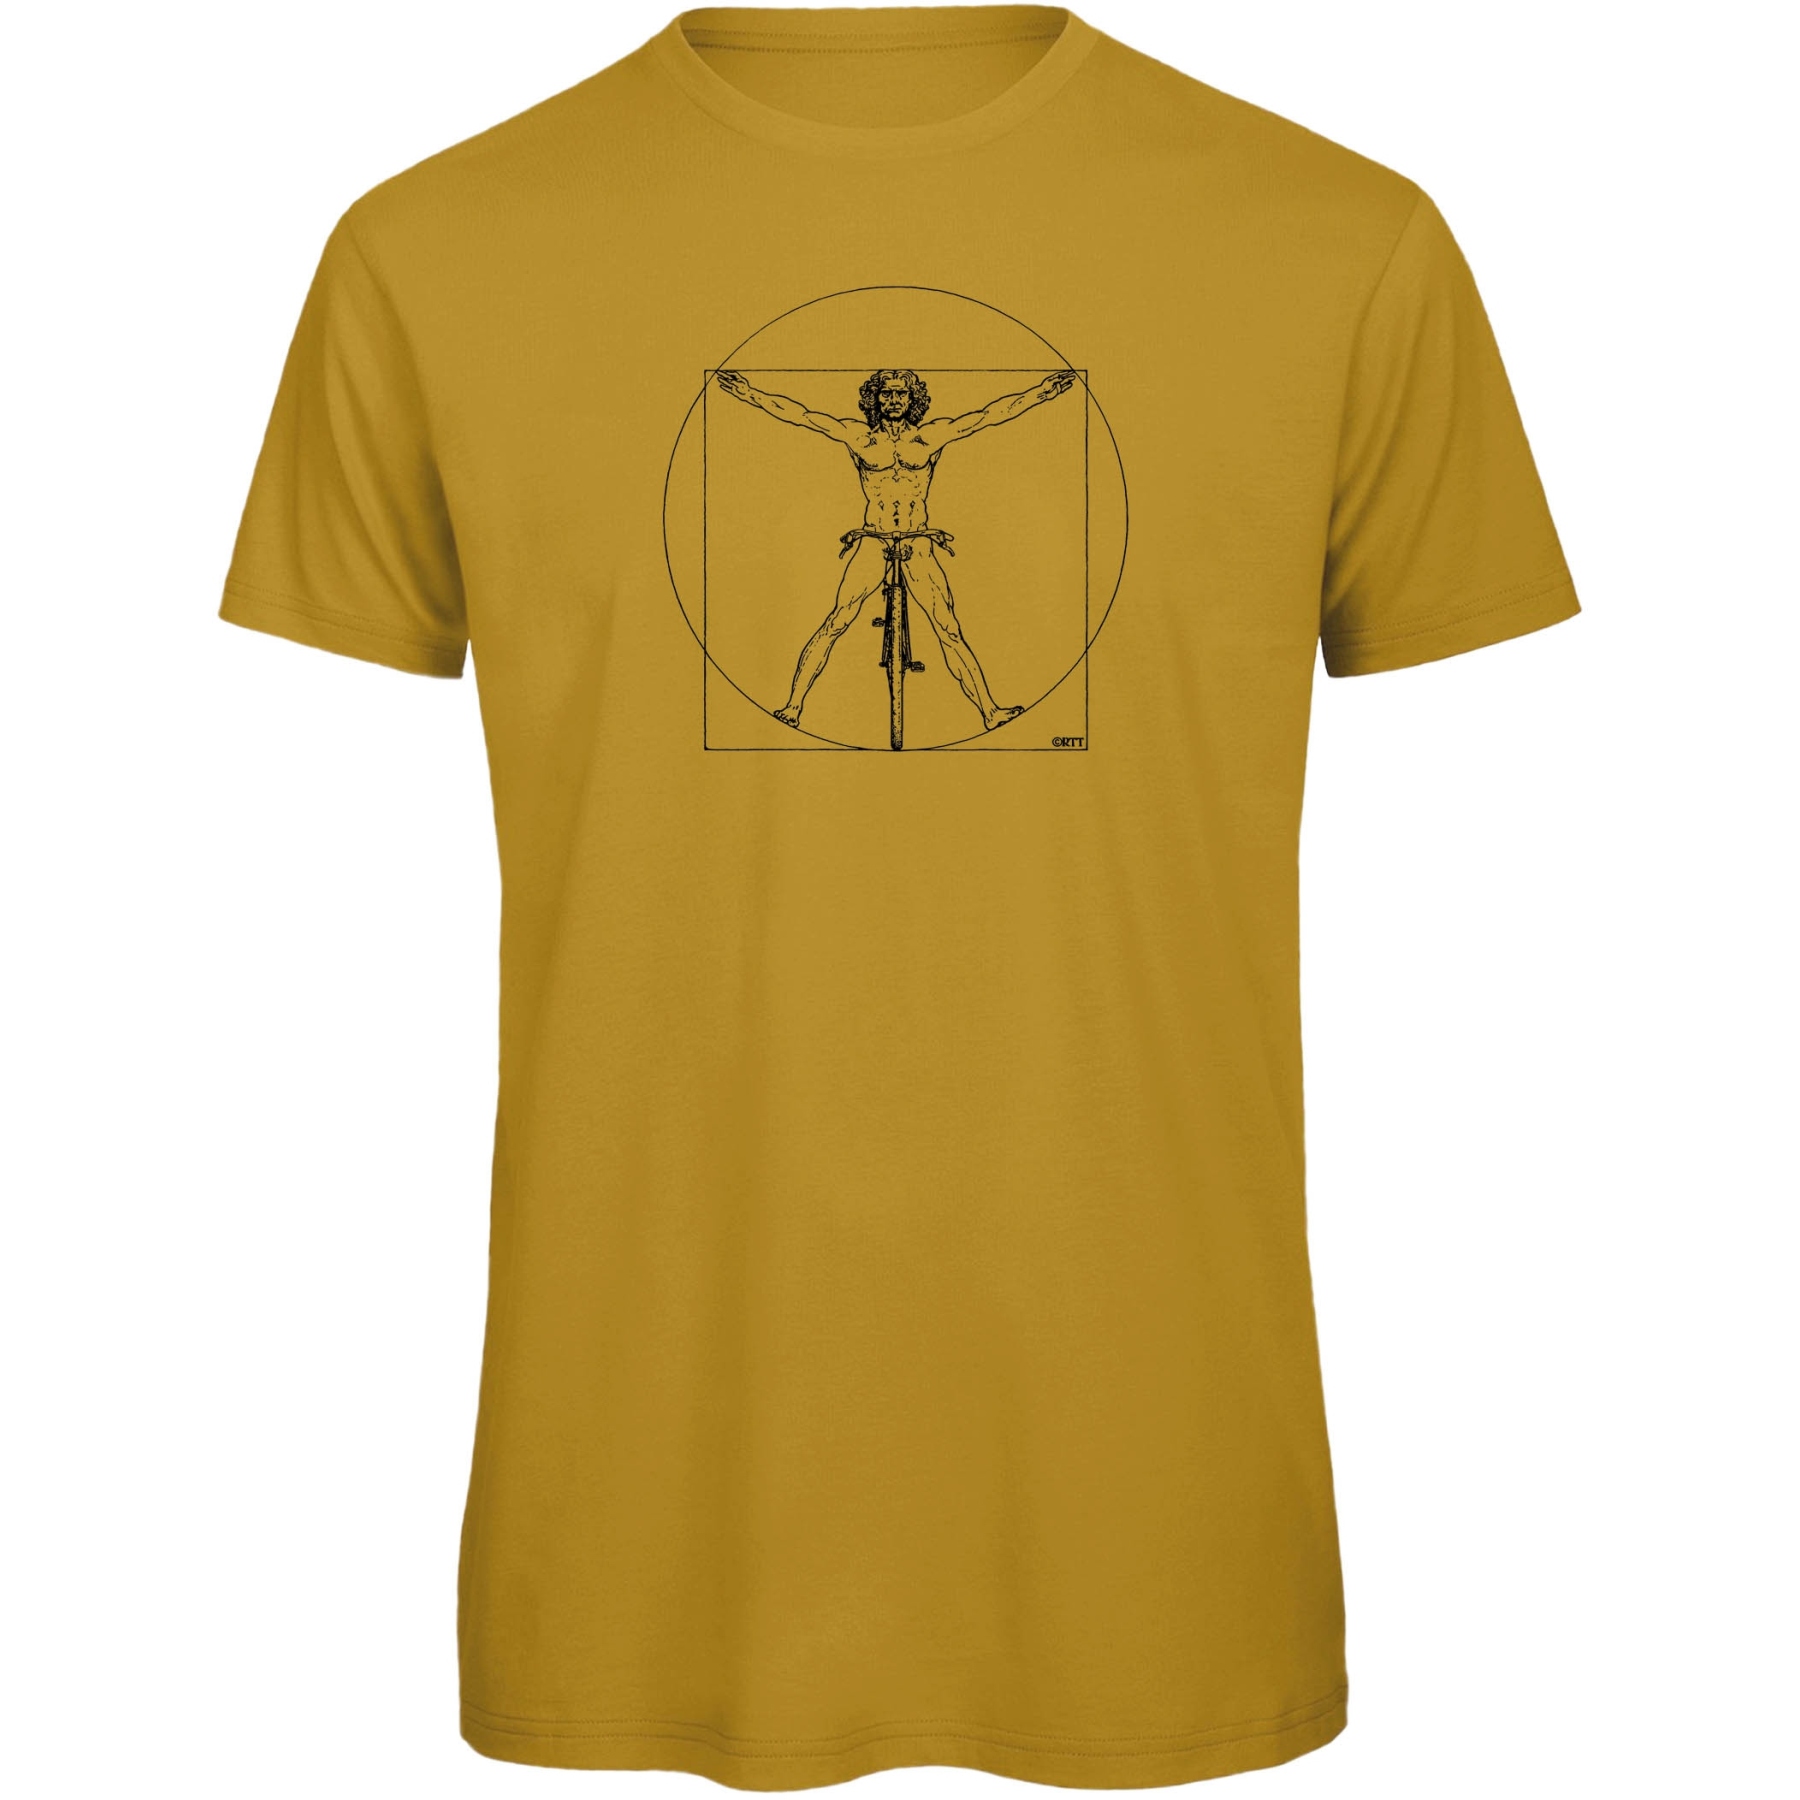 Productfoto van RTTshirts Fiets T-Shirt - DaVinci - ochre